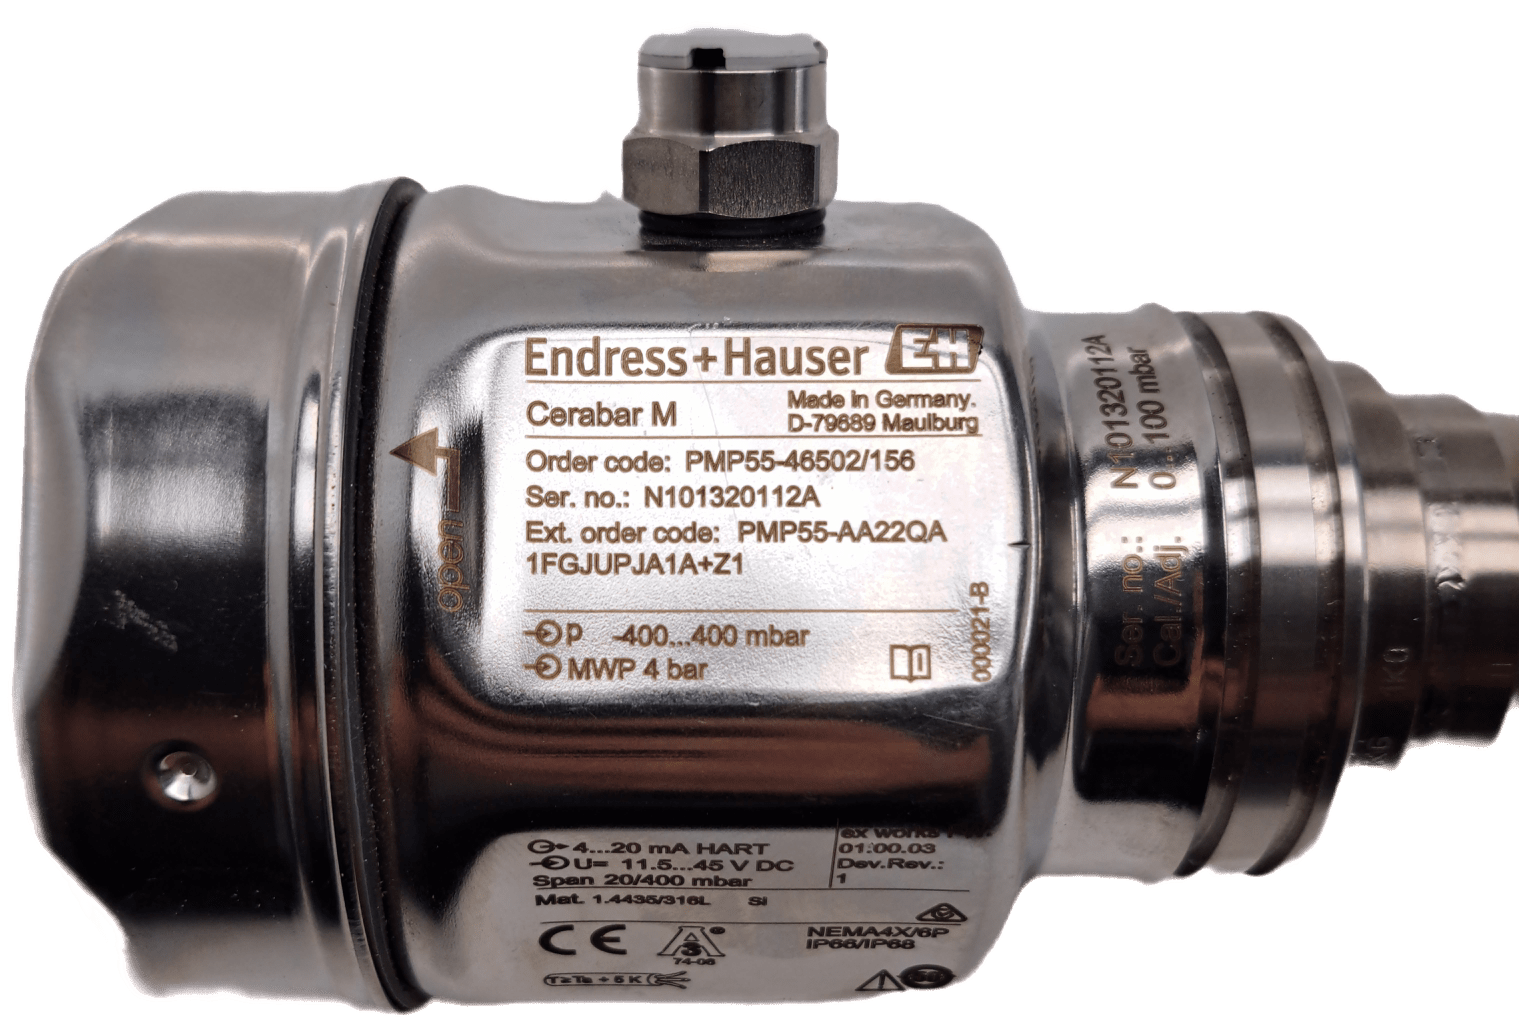 Endress & Hauser Cerabar M PMP55-46502/156 - #product_category# | Klenk Maschinenhandel